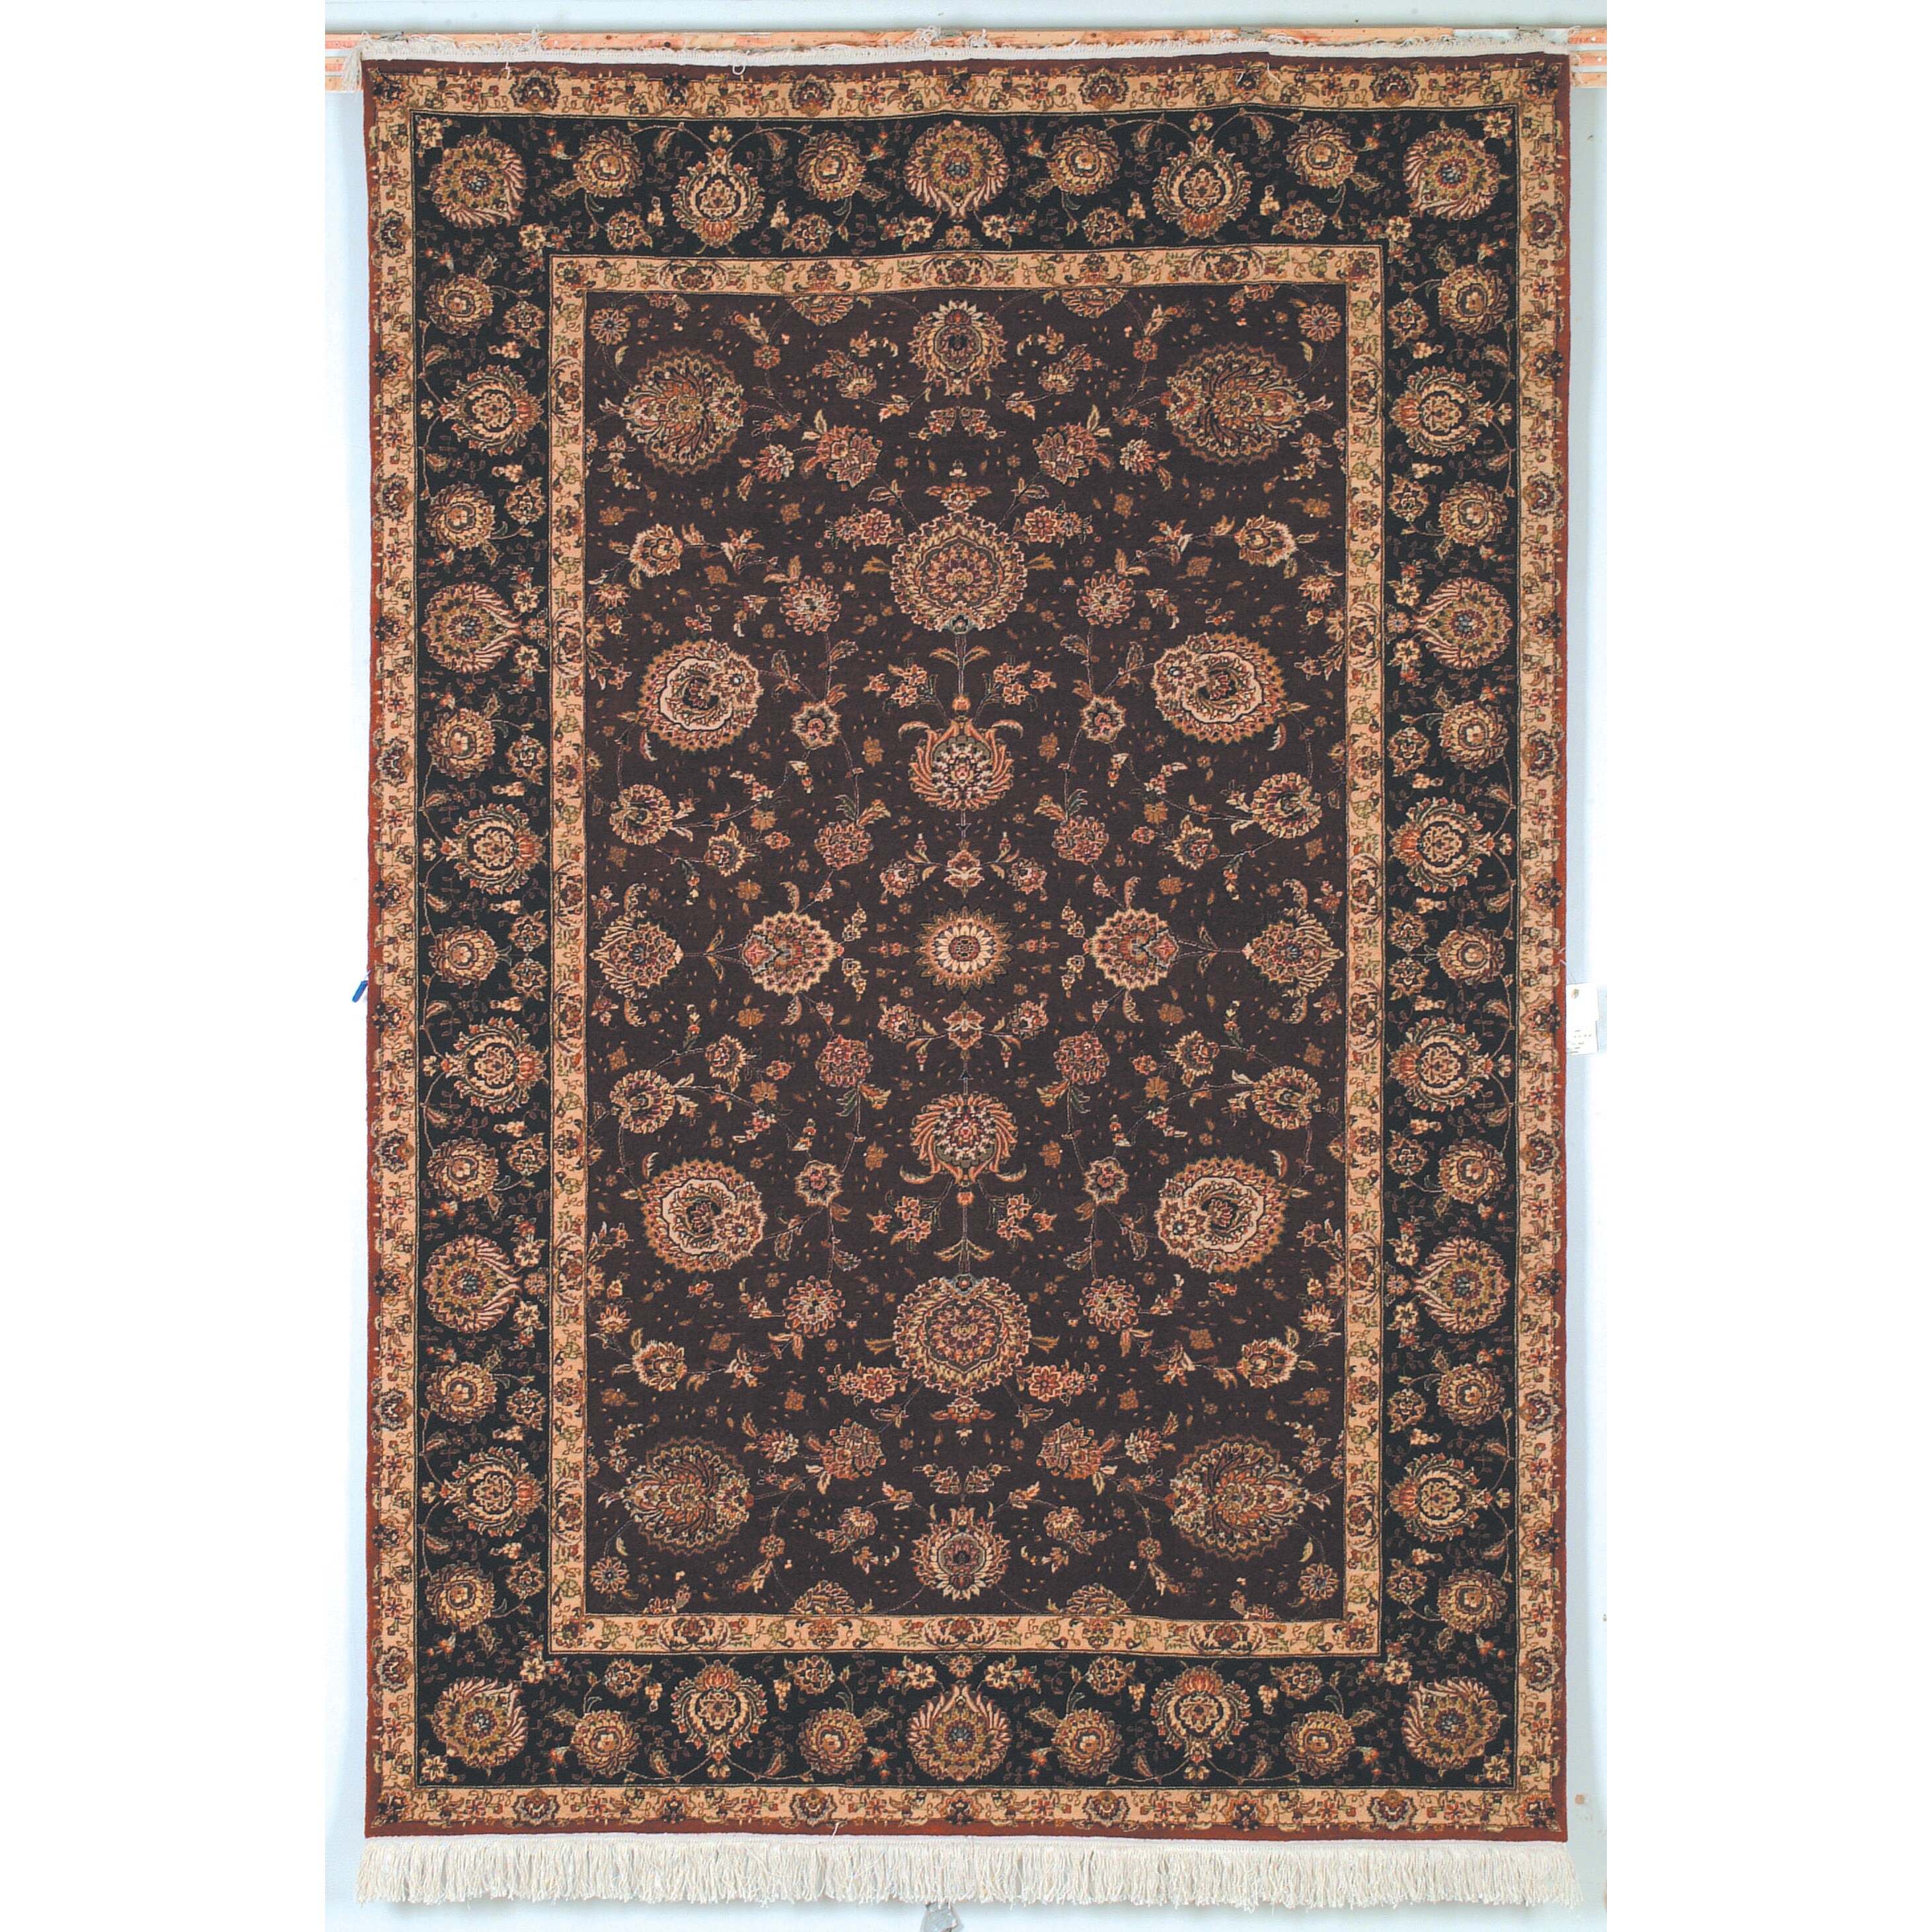 Safavieh Hand knotted Tabriz Floral Burgundy/ Burgundy Wool/ Silk Rug (6 X 9)